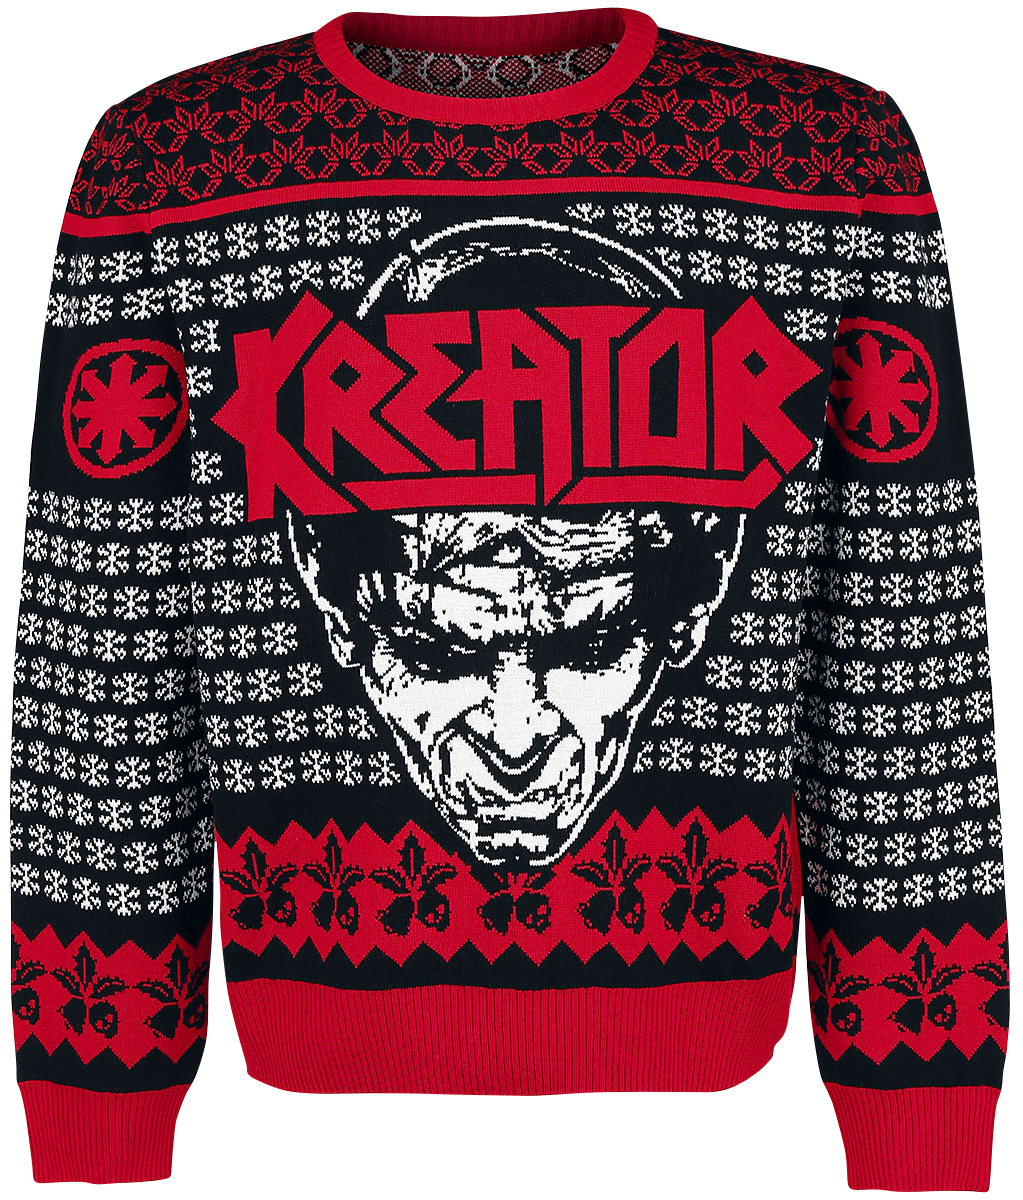 Kreator - Holiday Sweater 2019 - Sweatshirt - multicolour image